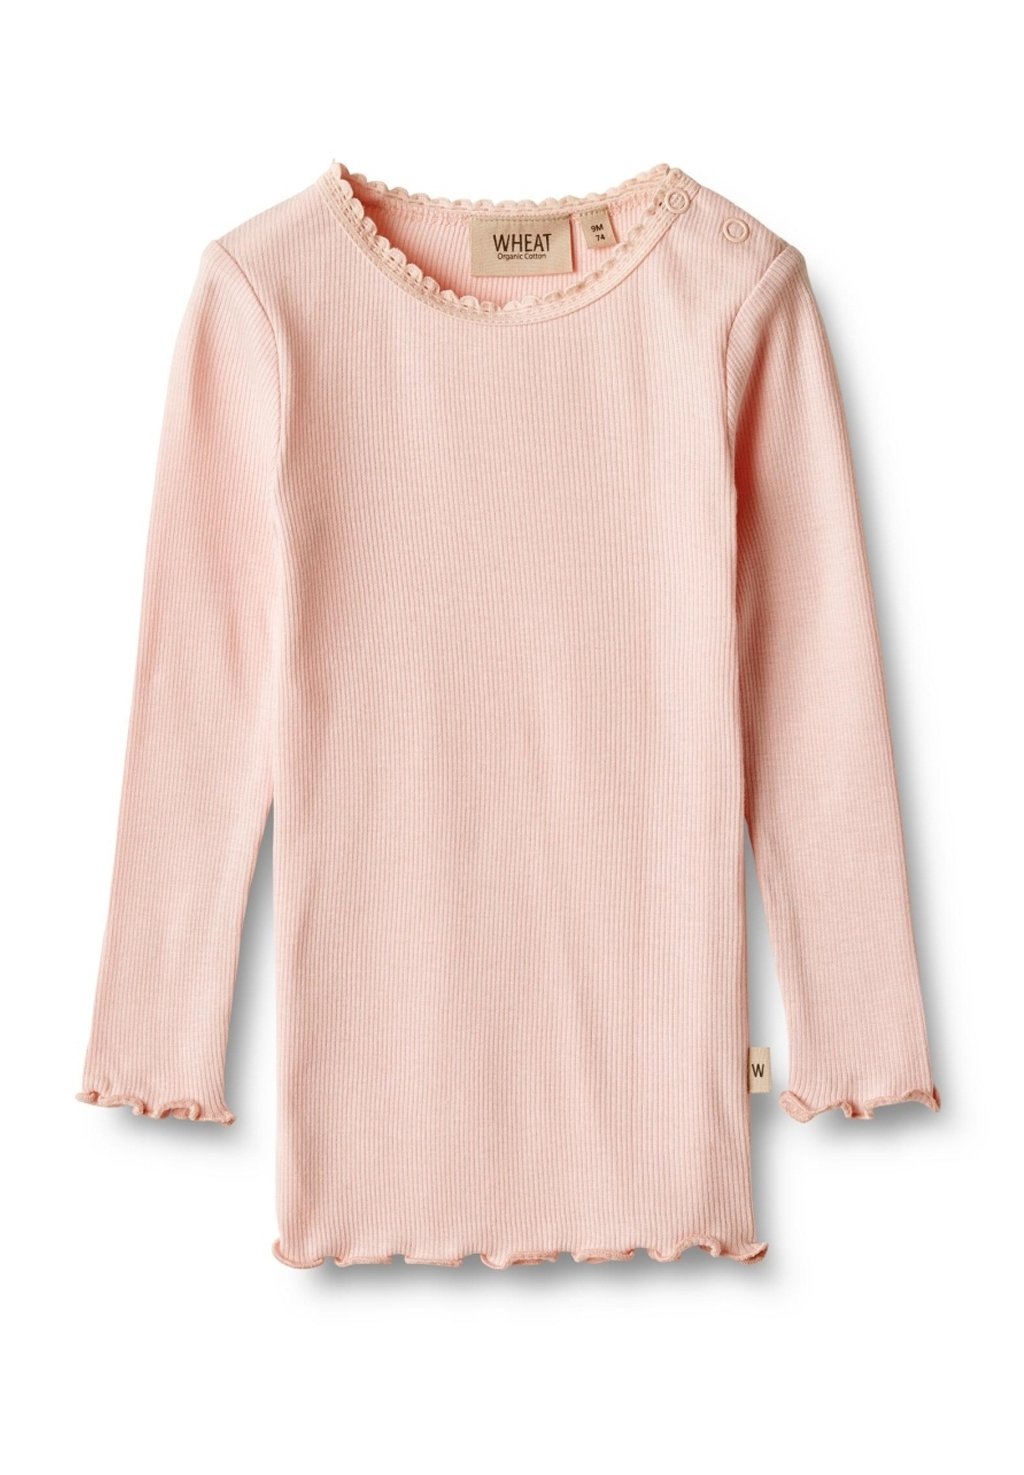 Рубашка с длинным рукавом Wheat, цвет rose ballet рубашка с длинным рукавом sublevel цвет light rose